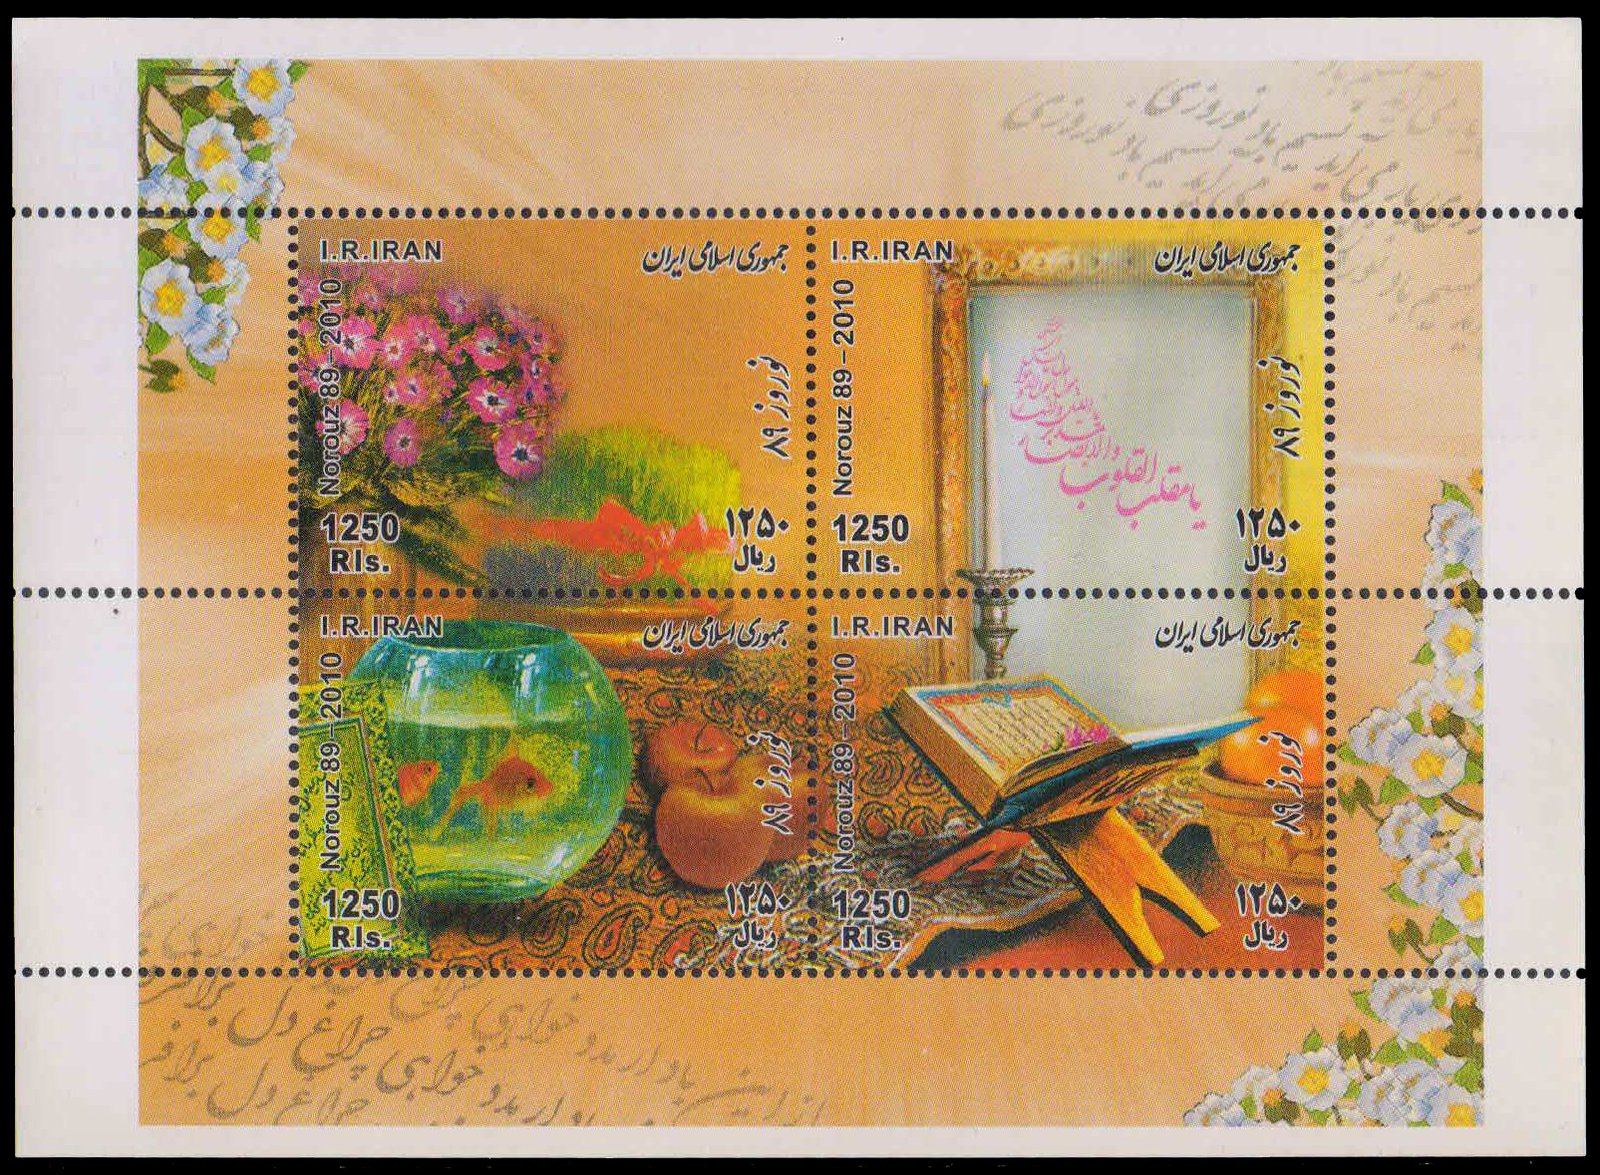 IRAN 2011-New Year, Flowers & Wheat-Koran Gold Fish bowl and Apples, Sheet of 4, MNH, S.G. MS 3312e, Cat £ 14-